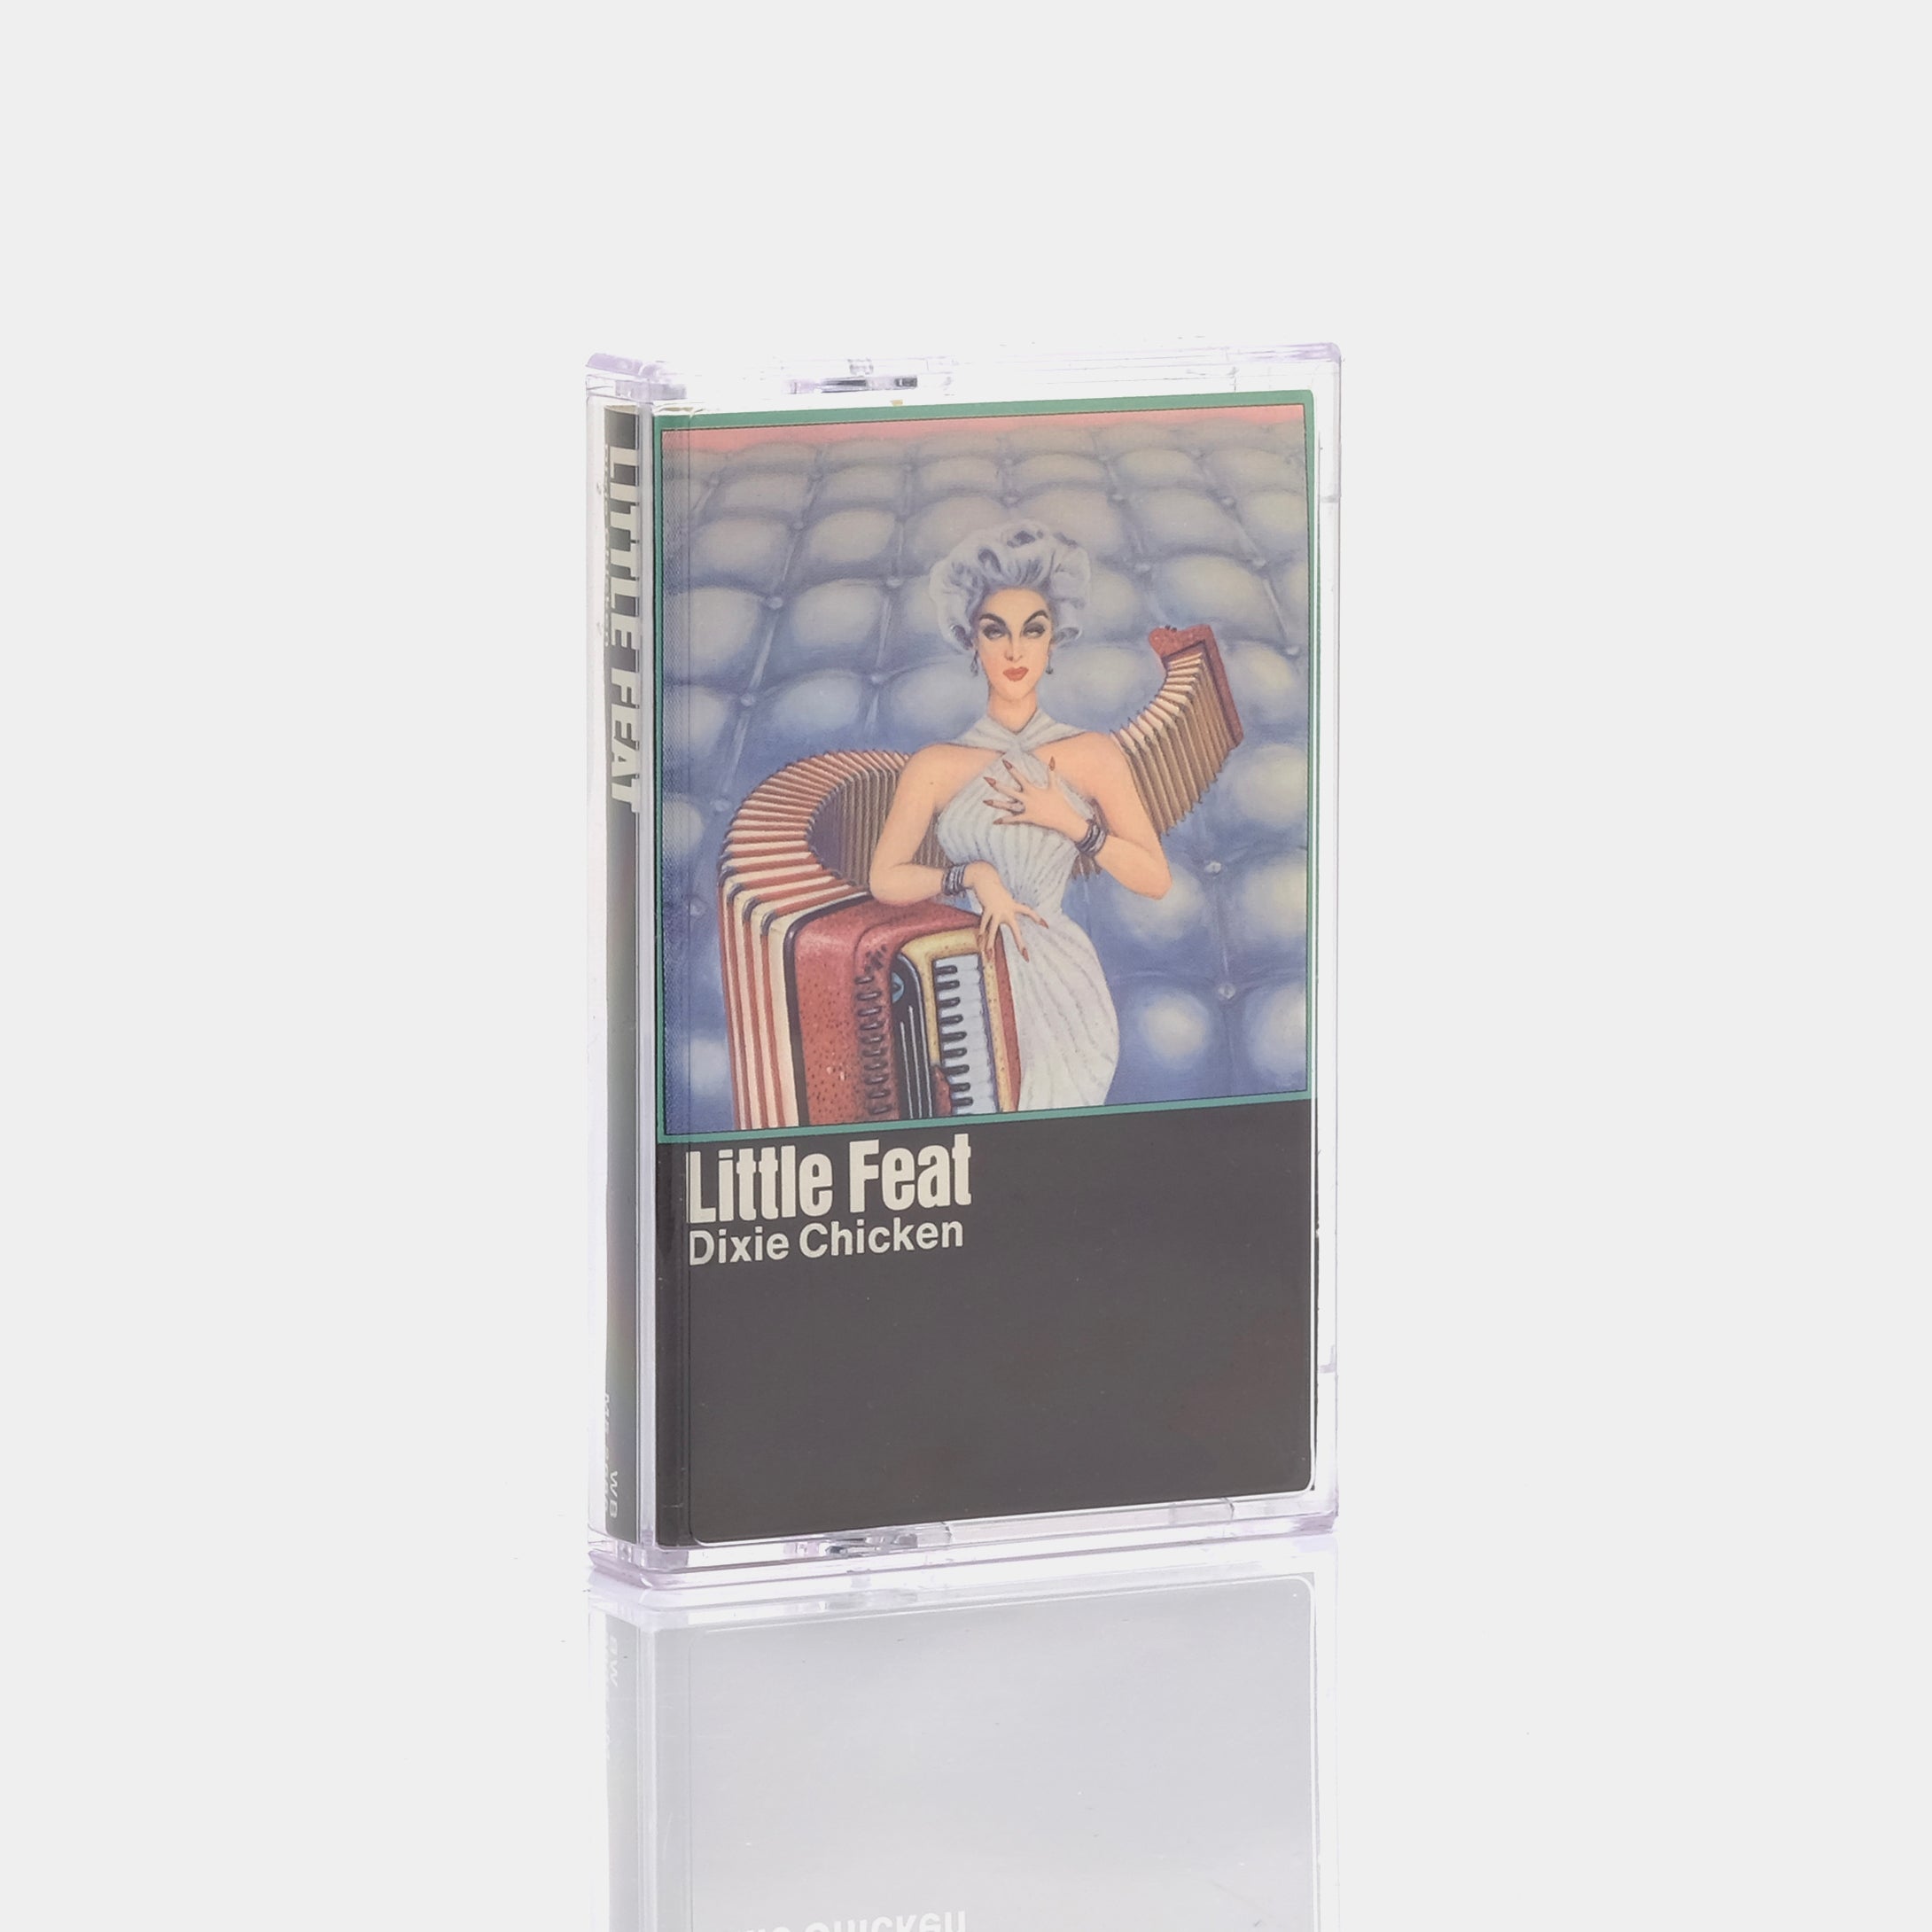 Little Feat - Dixie Chicken Cassette Tape